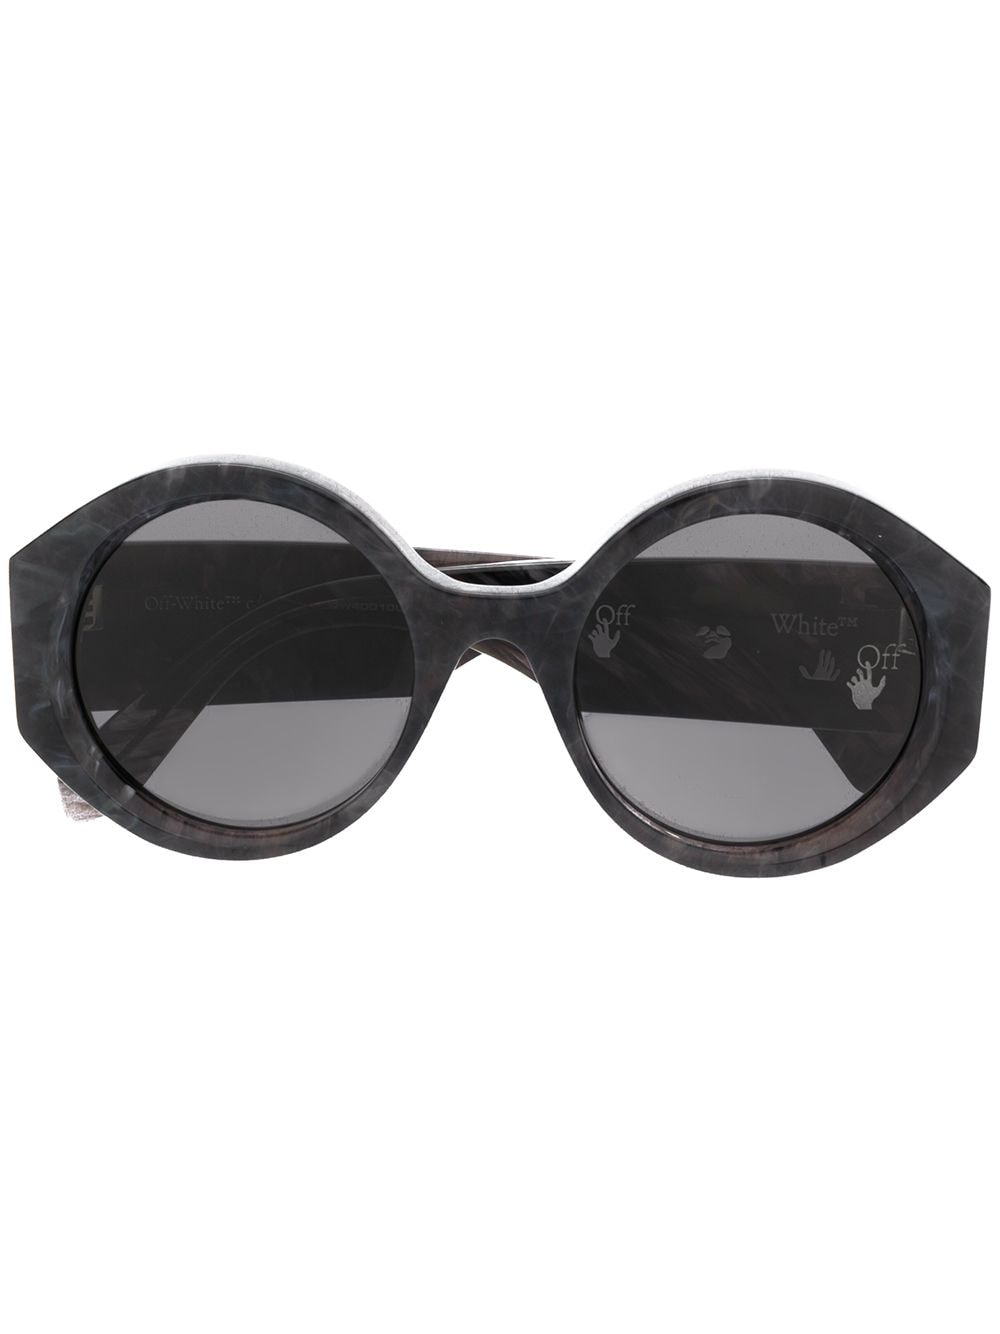 Off-White - Virgil Square-Frame Tortoiseshell Acetate Sunglasses Off-White